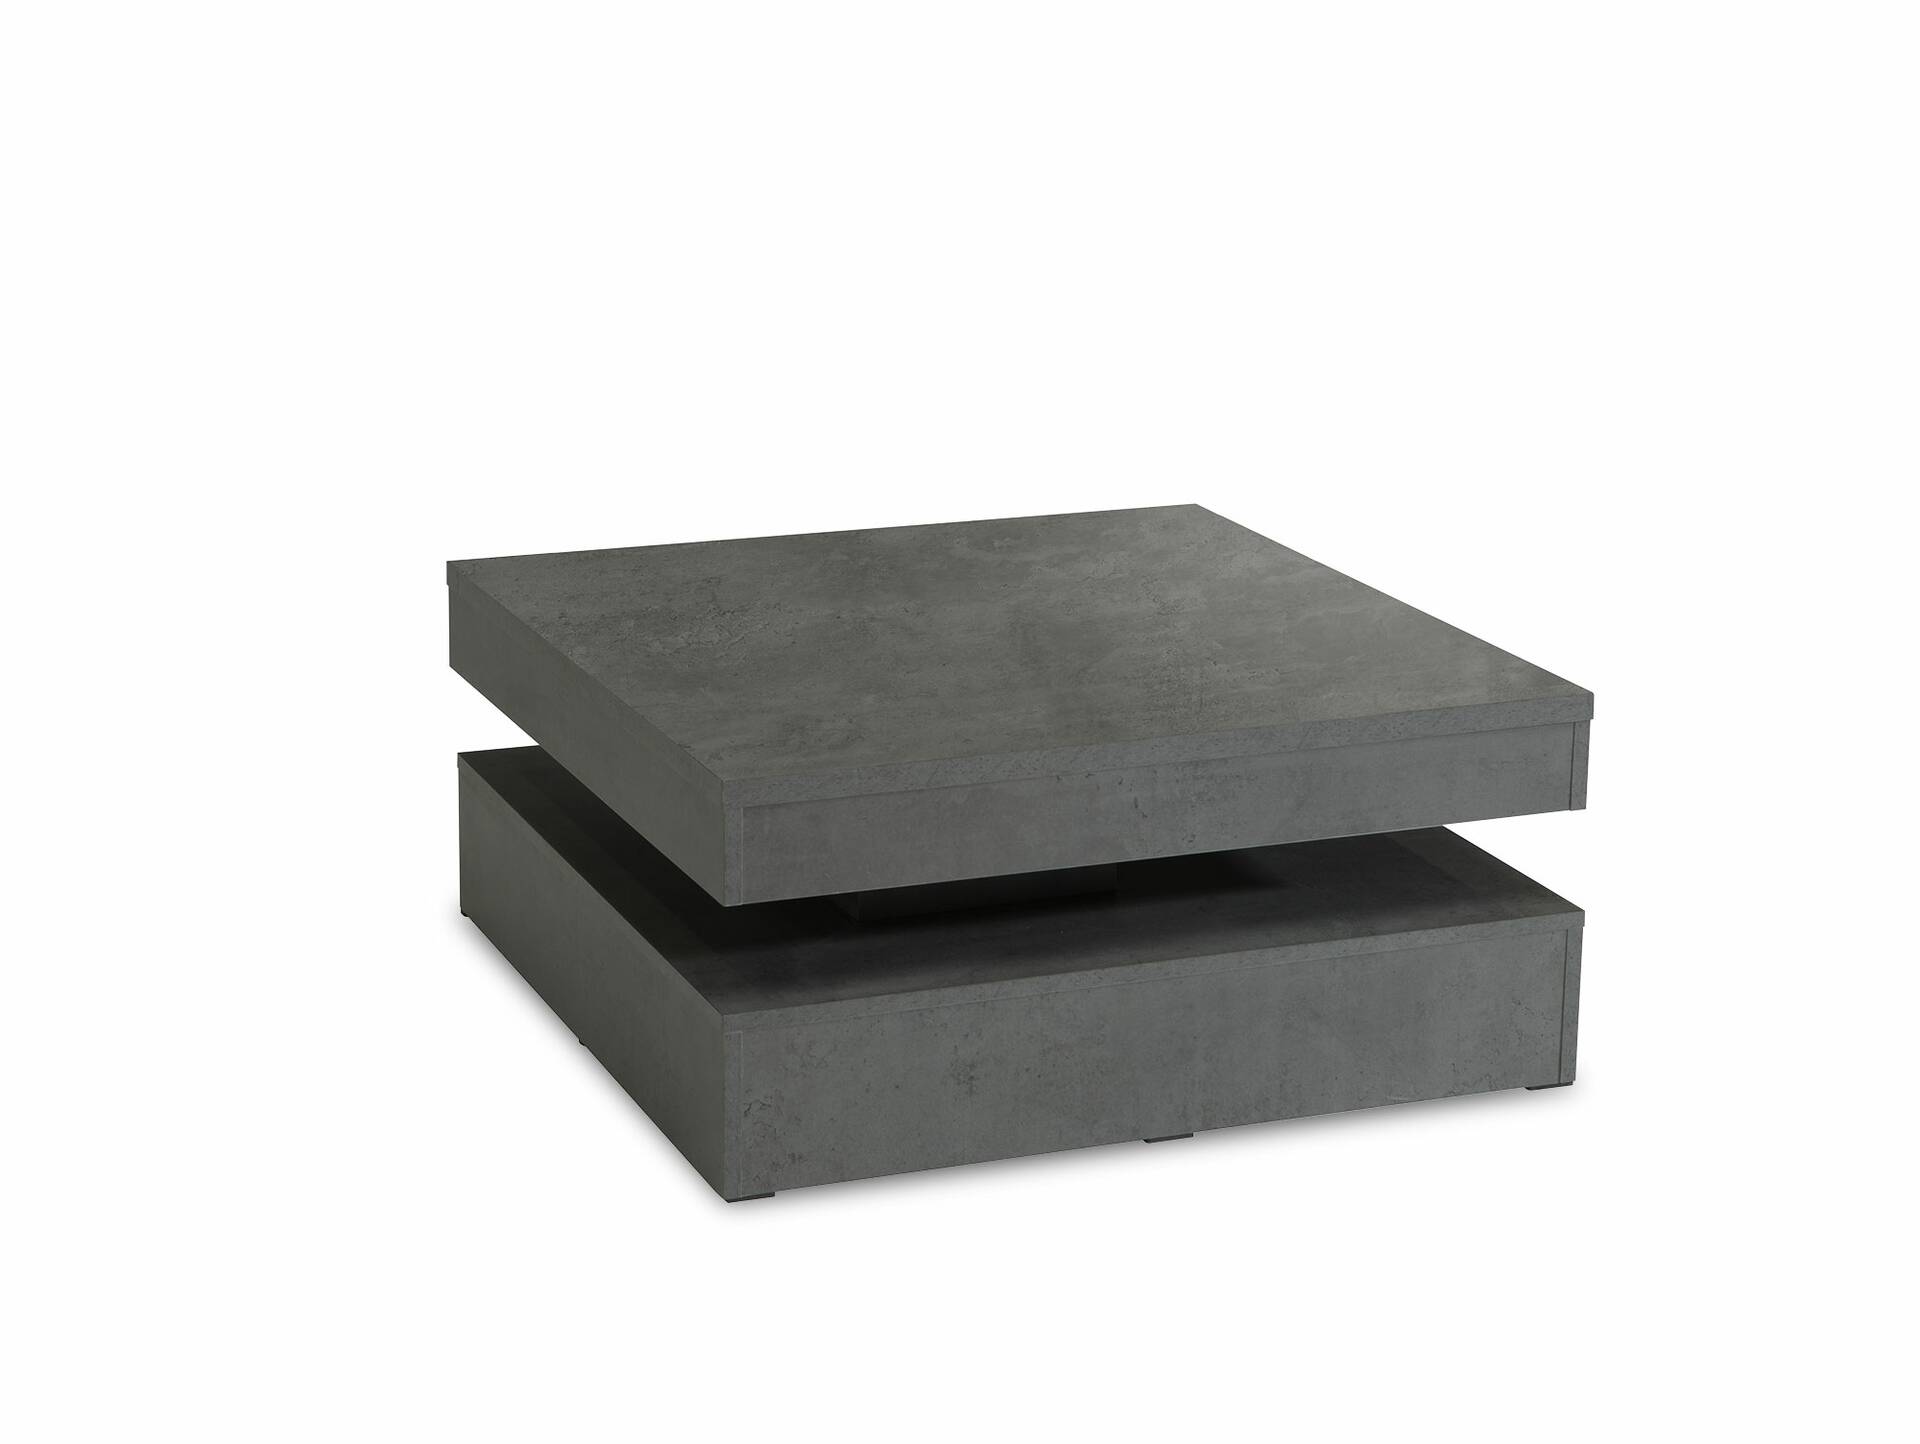 PARLA Couchtisch quadratisch mit Drehmechanismus, Material Dekorspanplatte betonfarbig dunkel